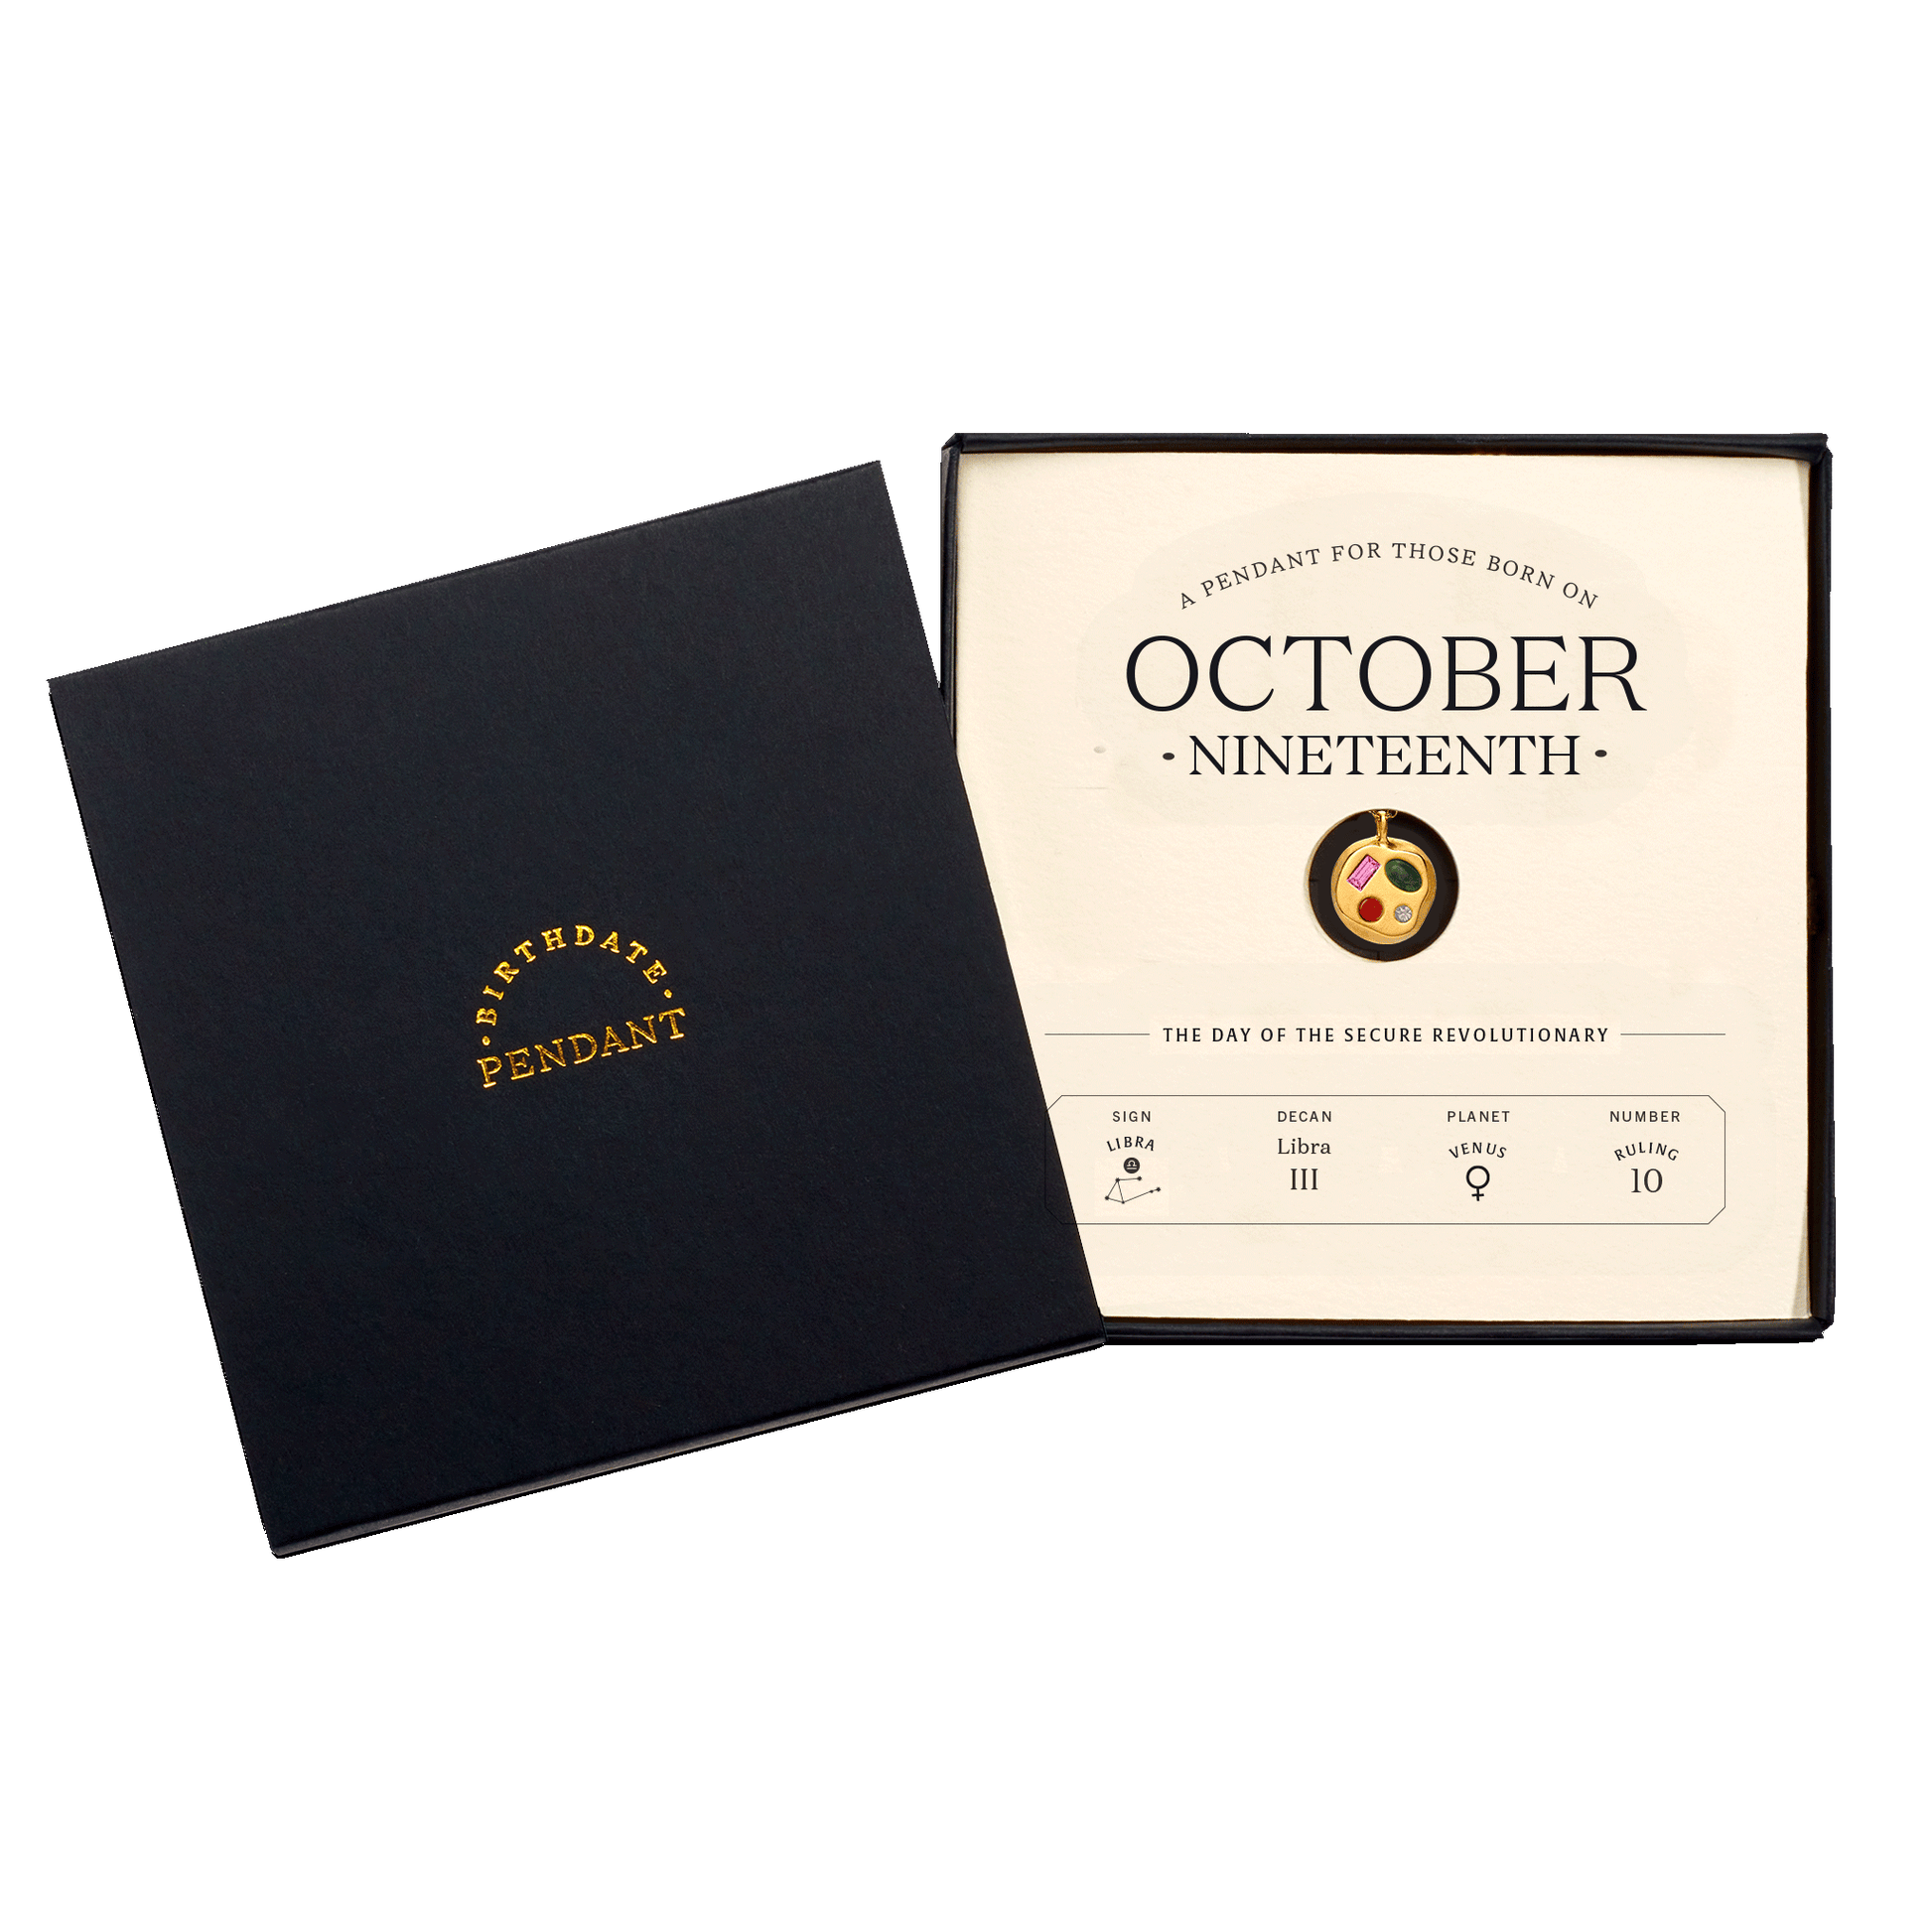 The October Nineteenth Pendant inside its box